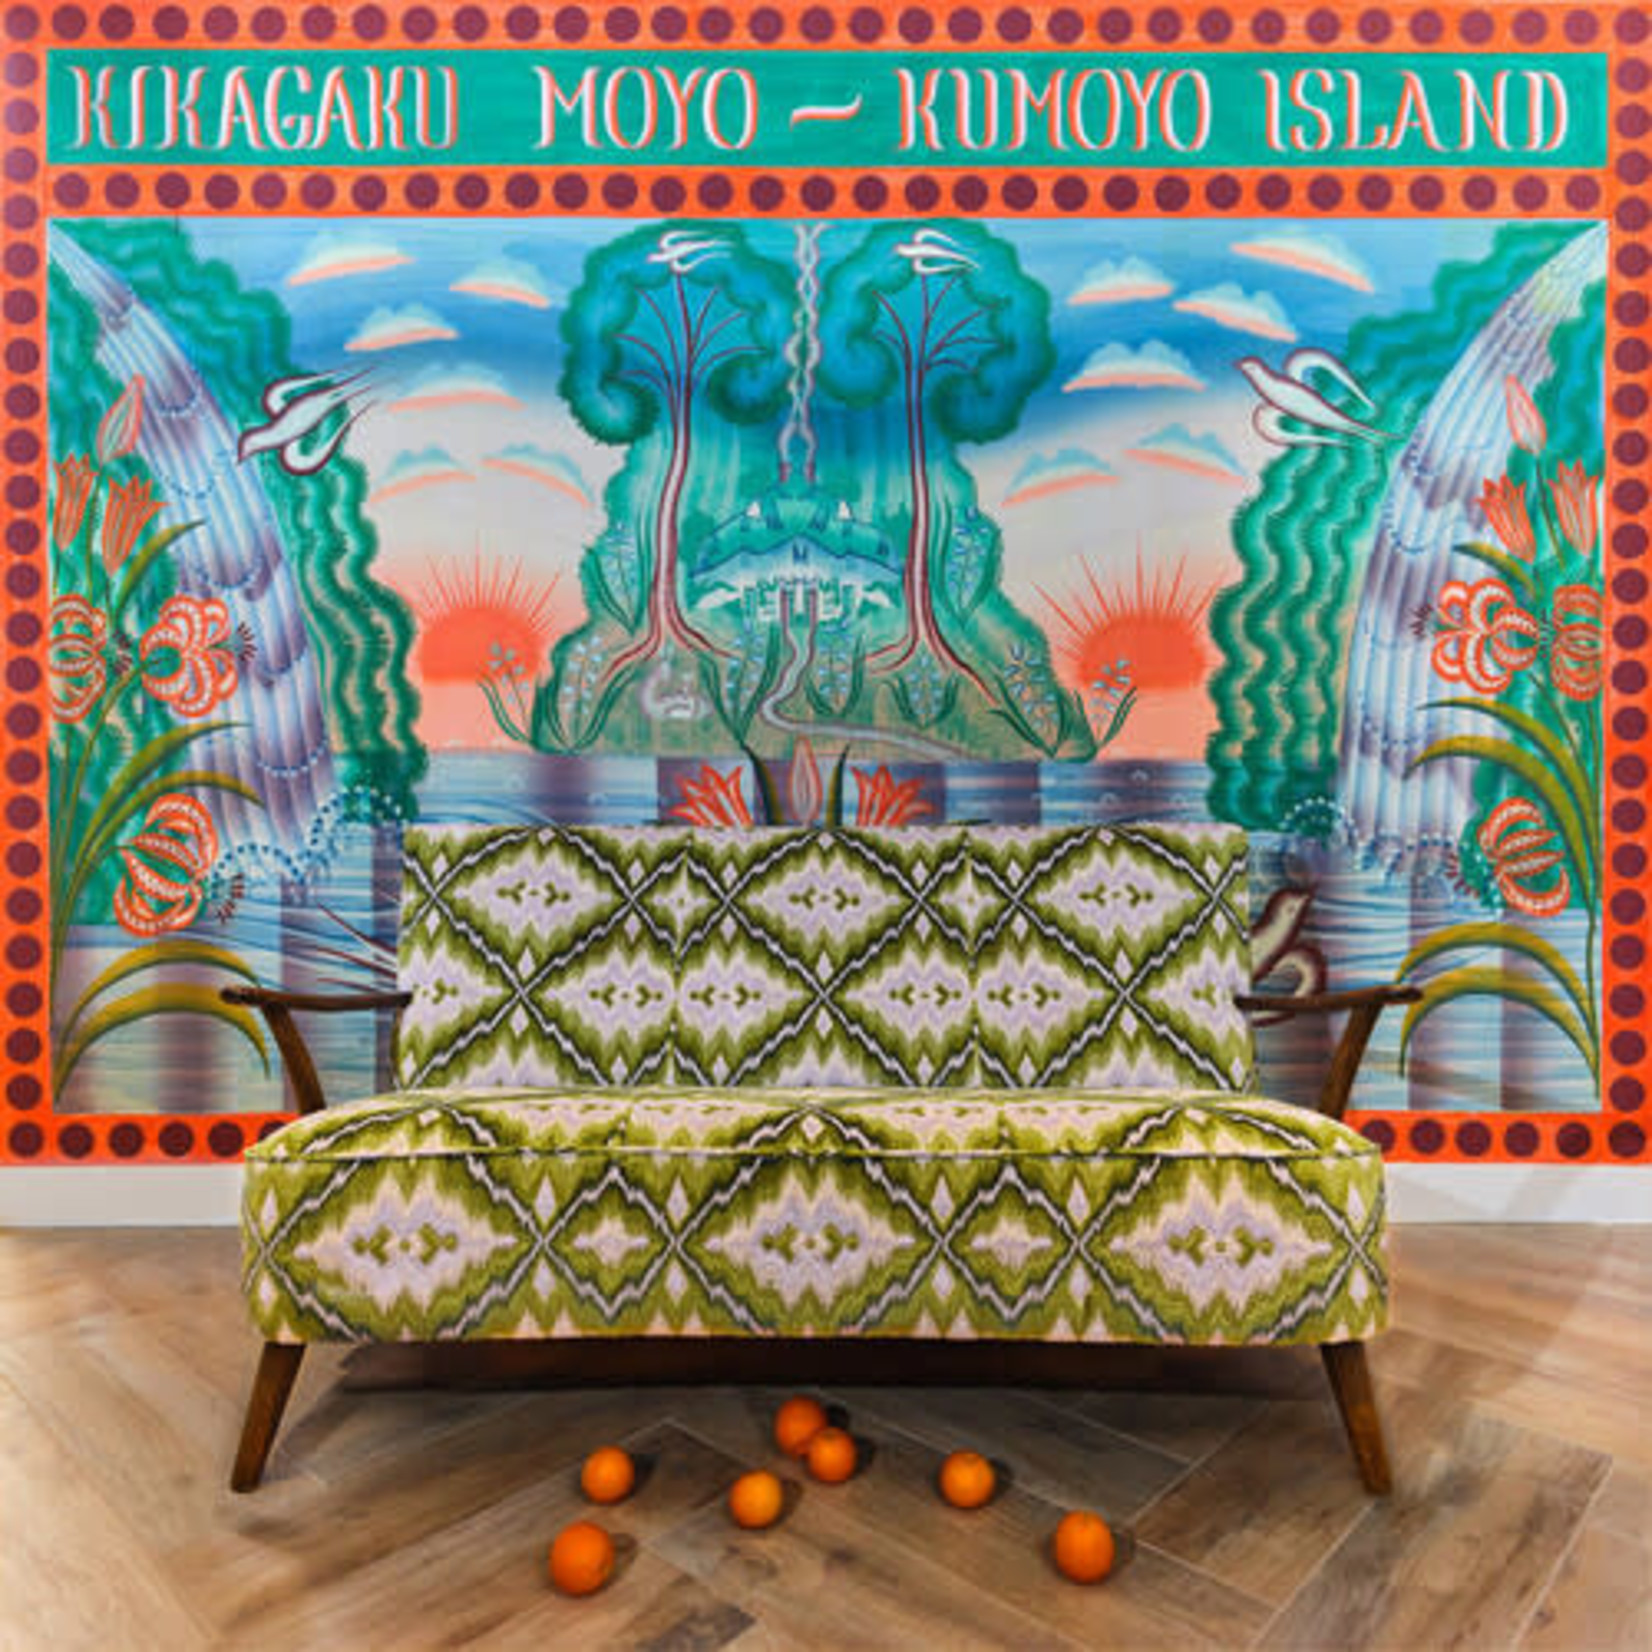 Kikagaku Mayo - Kumoyo Island (LP)